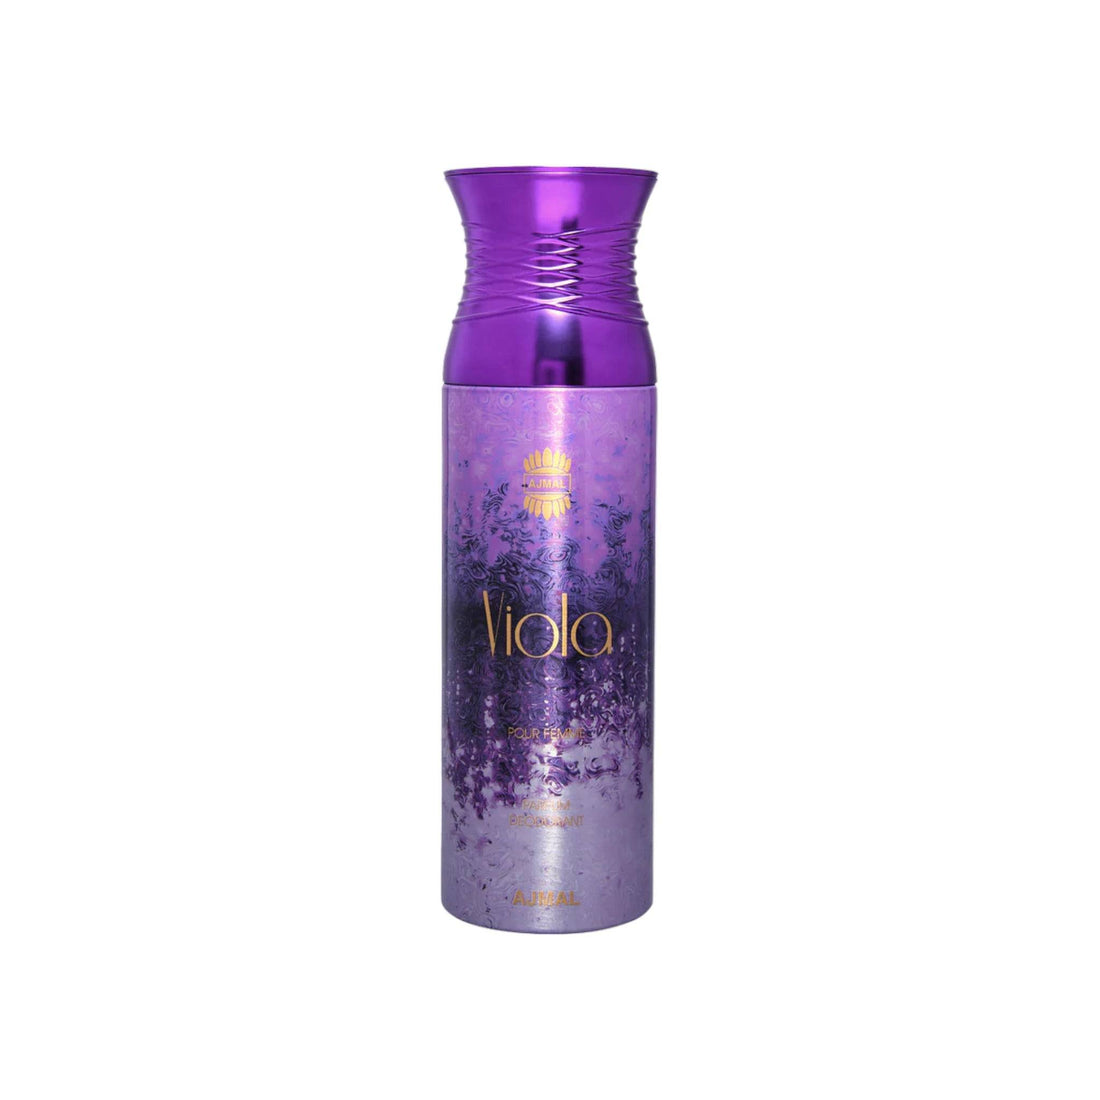 Ajmal Viola Deodorant 200ml bottle, showcasing its elegant and feminine design, set against a modern backdrop.